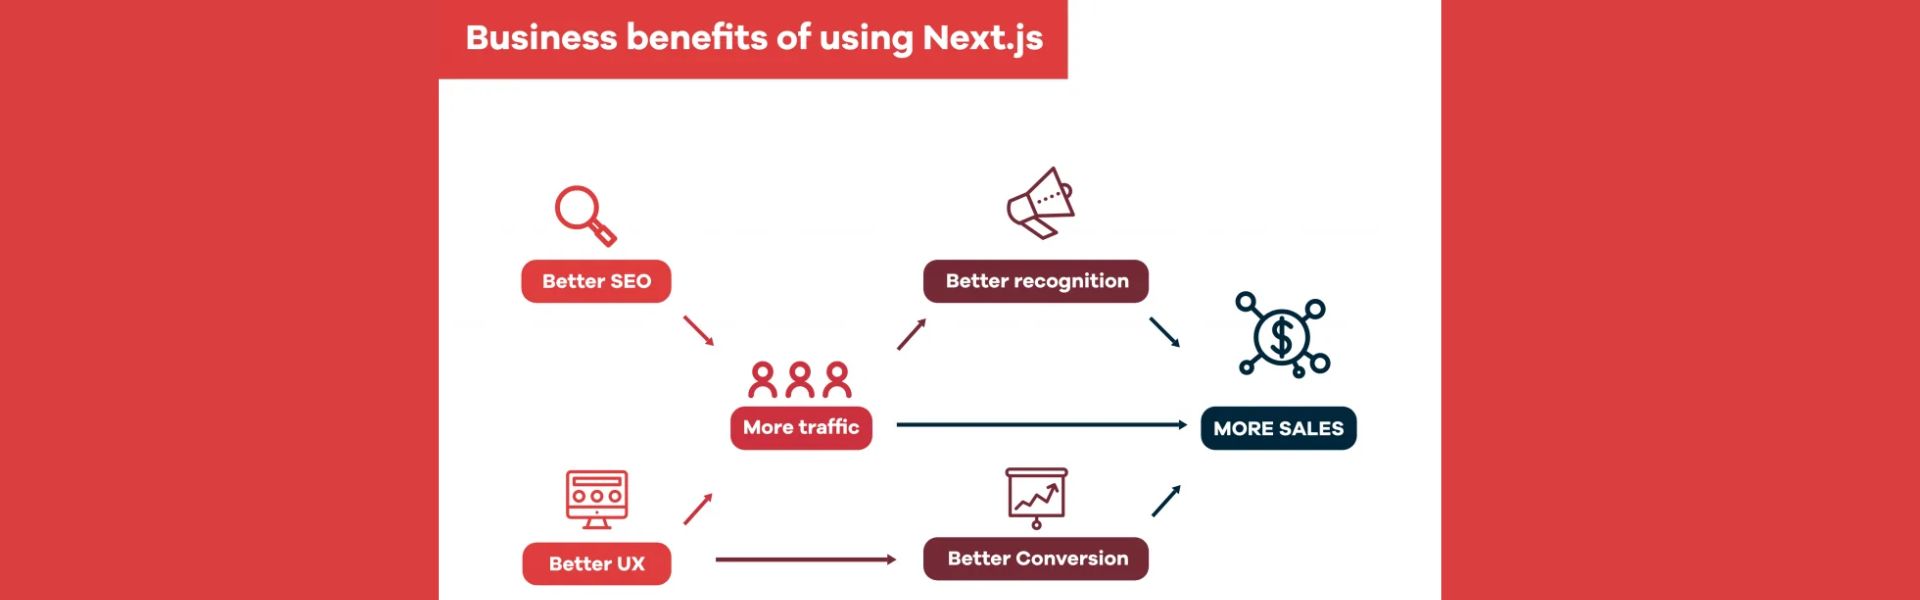 Benefits of Next.js